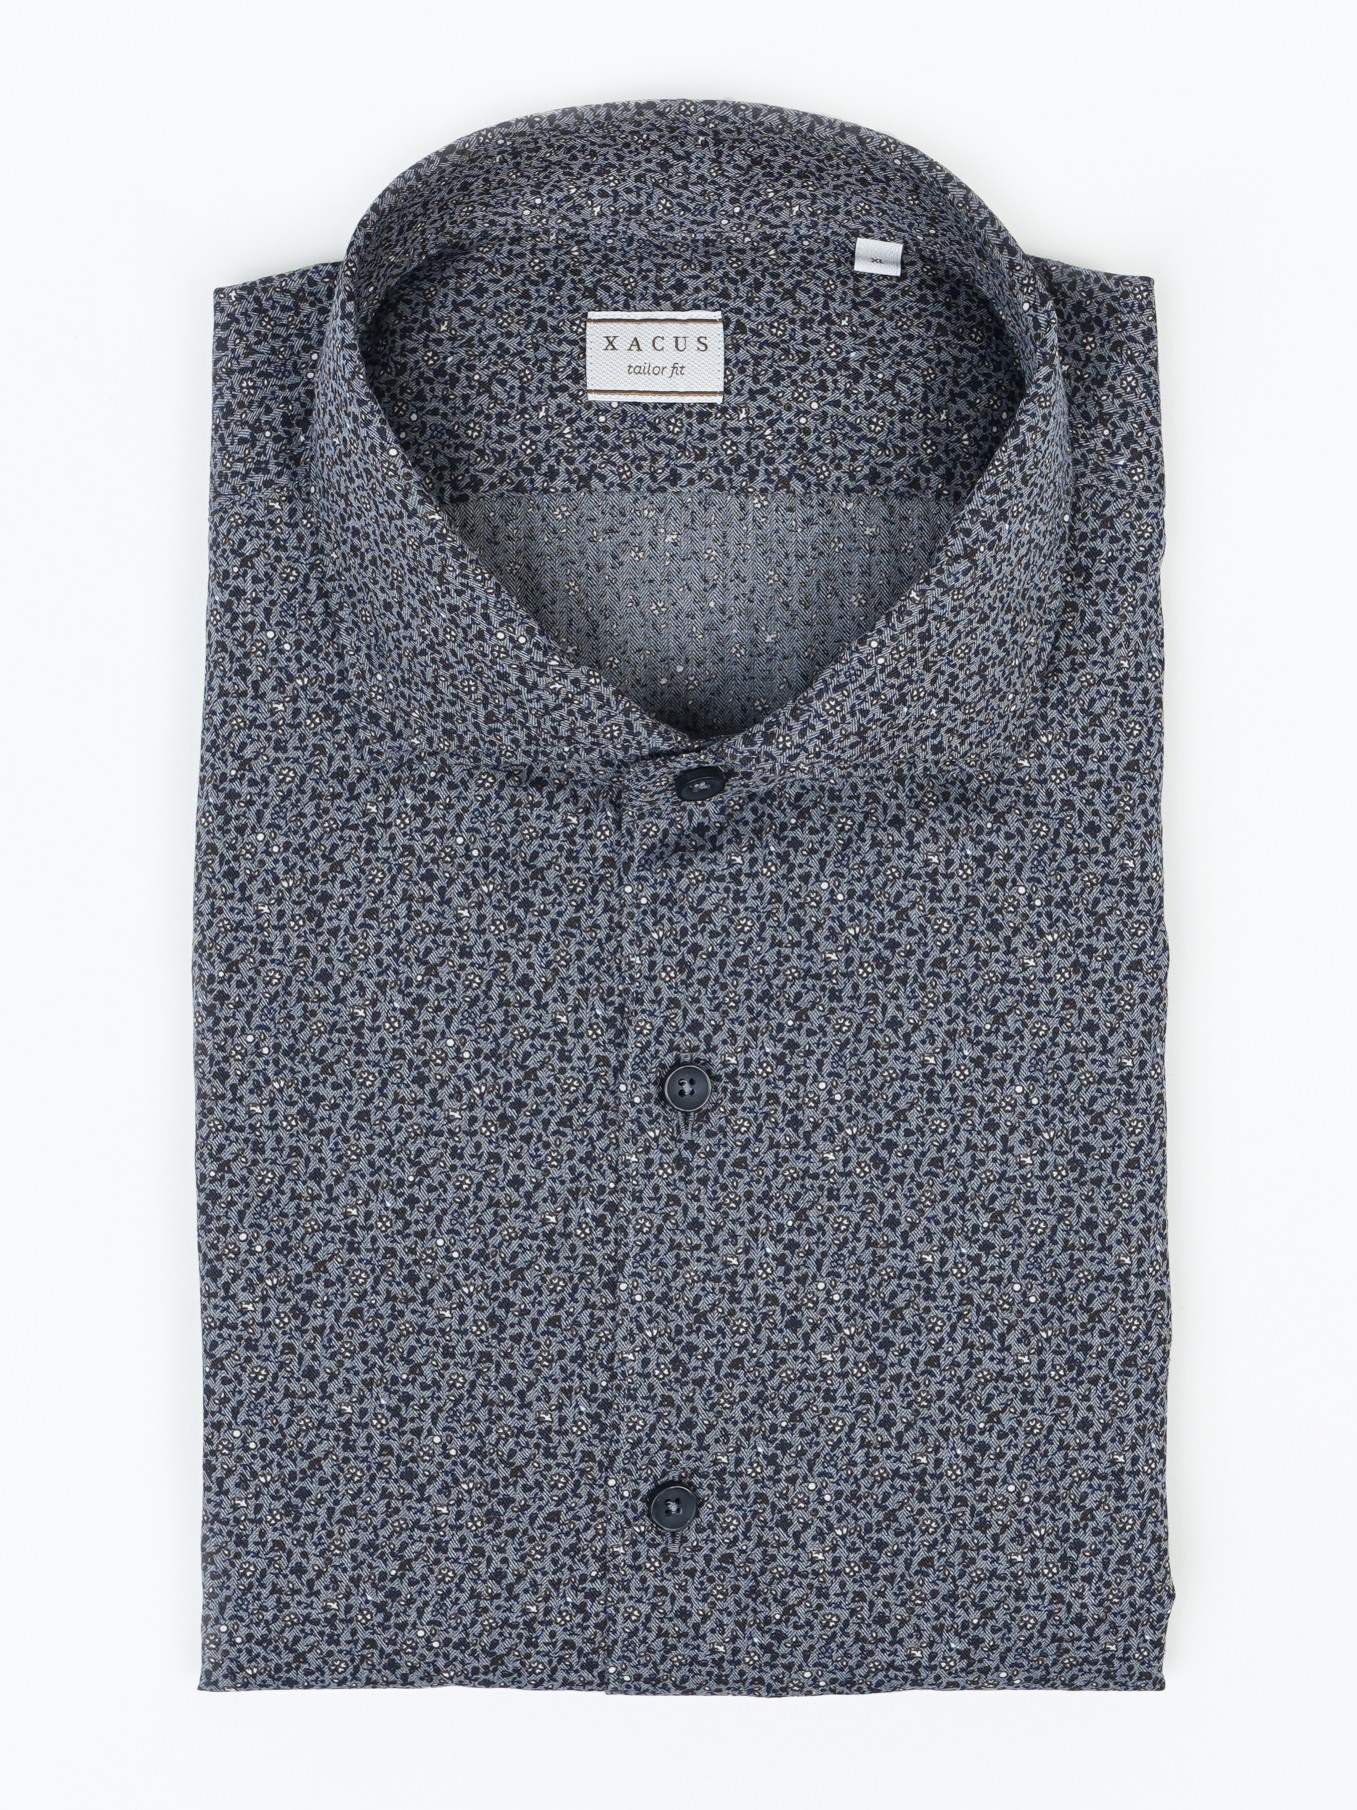 camisa-ml-xacus-722ml-31507002-grey